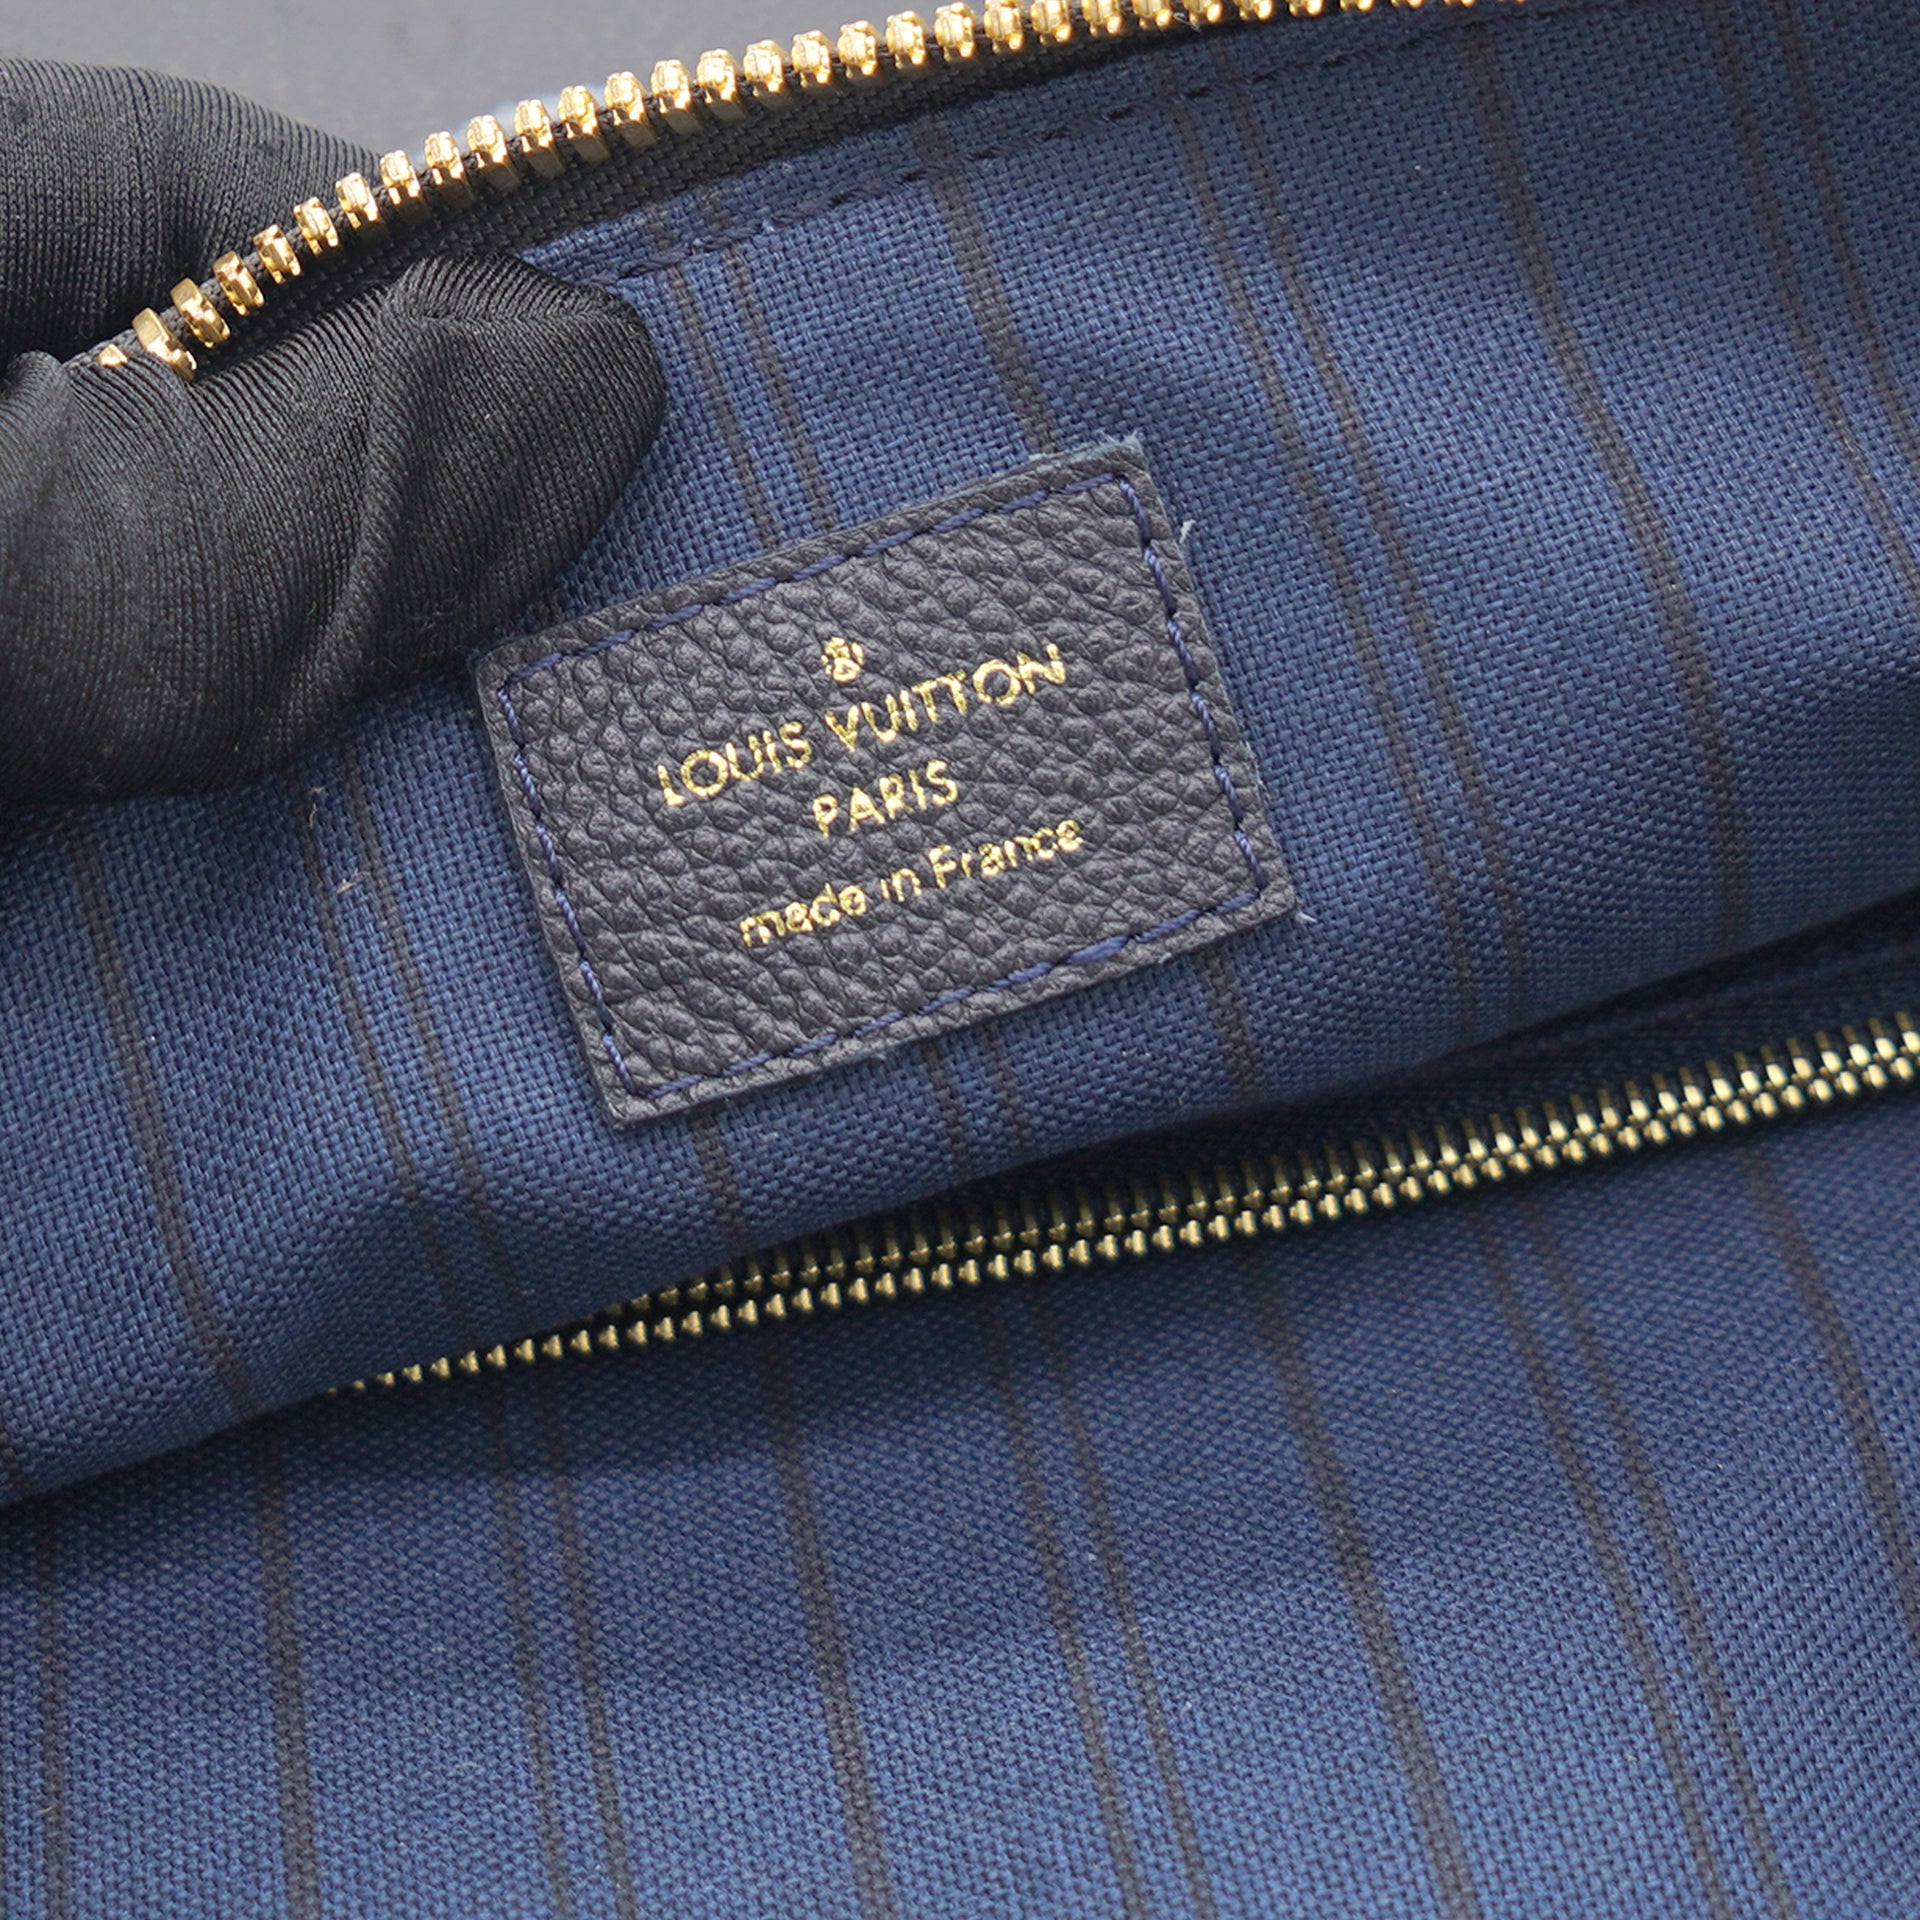 Shop authentic Louis Vuitton Monogram Empreinte Lumineuse PM at